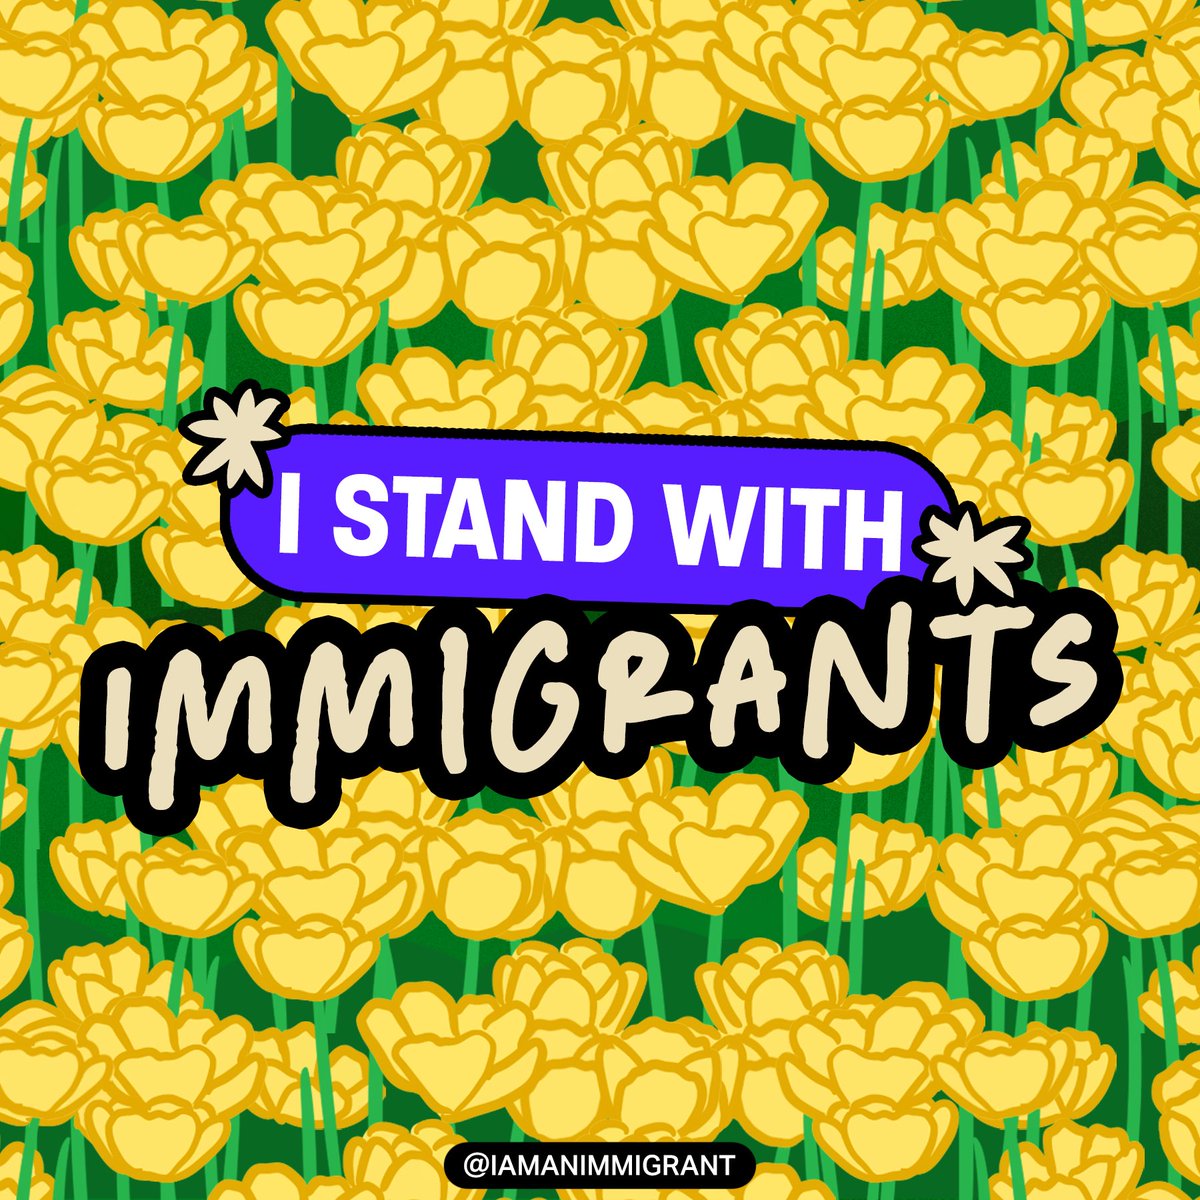 We stand with + celebrate immigrants ❤️ 

#IStandWithImmigrants #IAAI #Immigrants